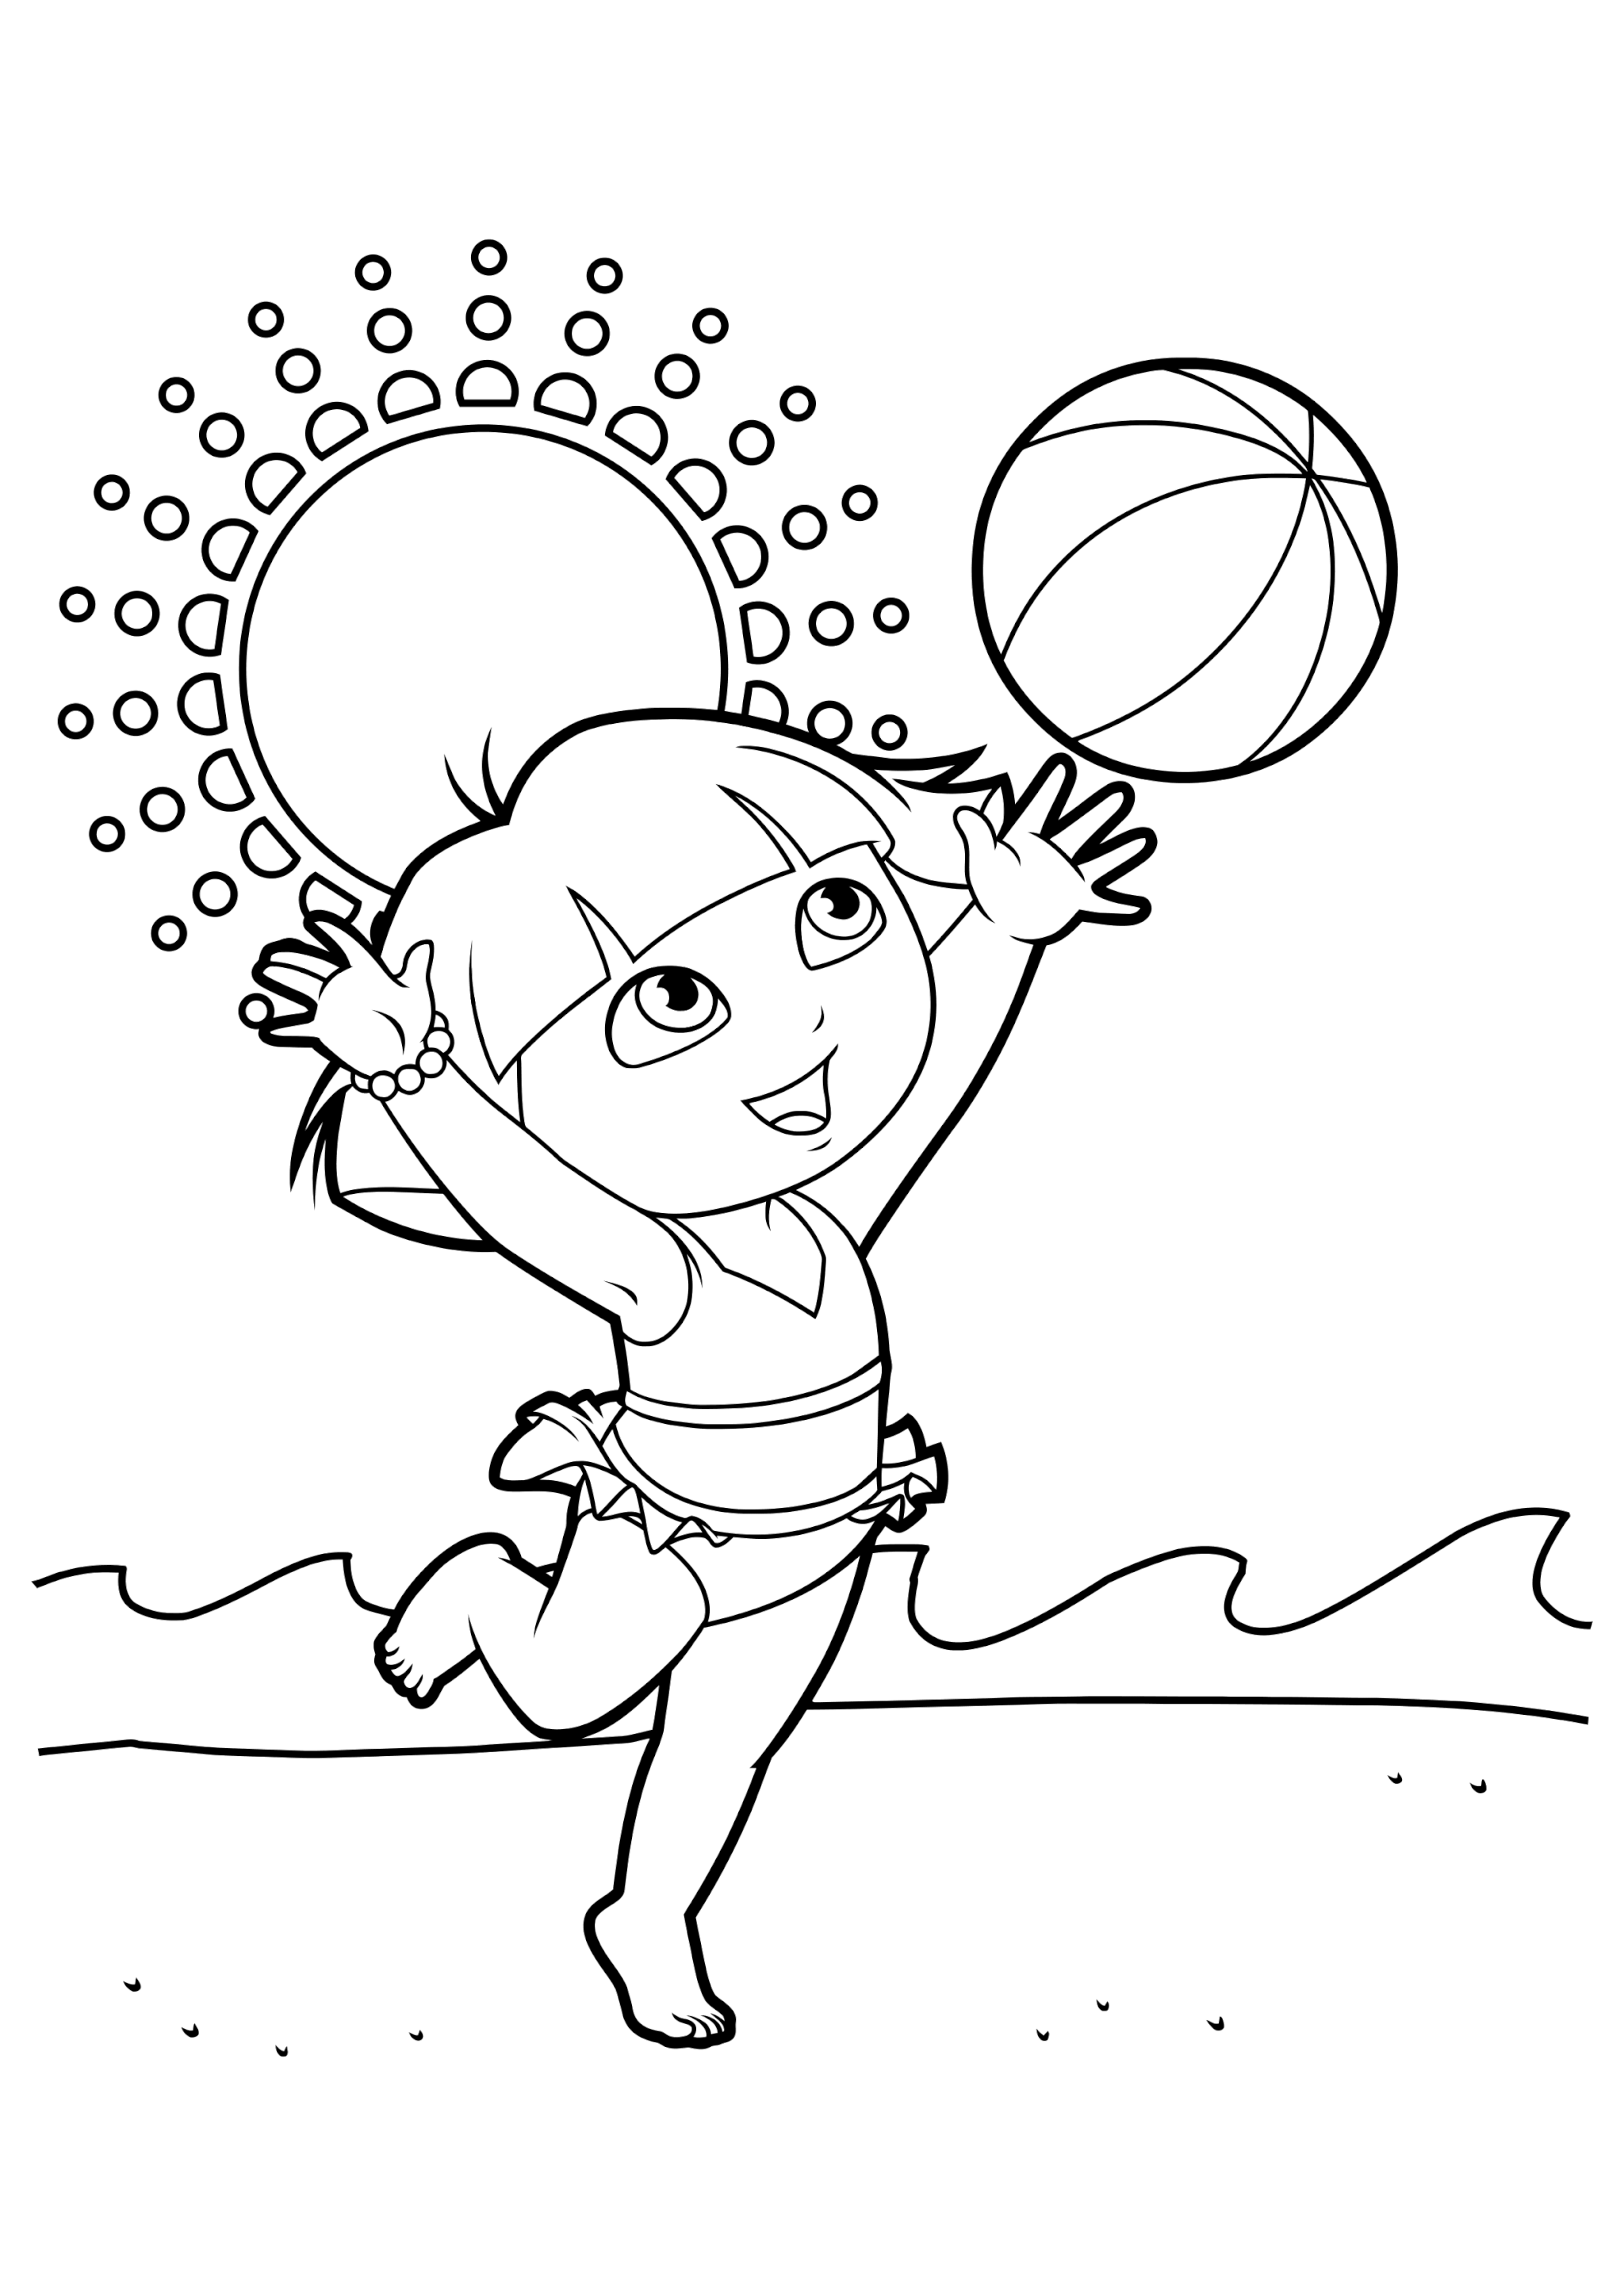 Раскраска Даша играет с мячом на пляже